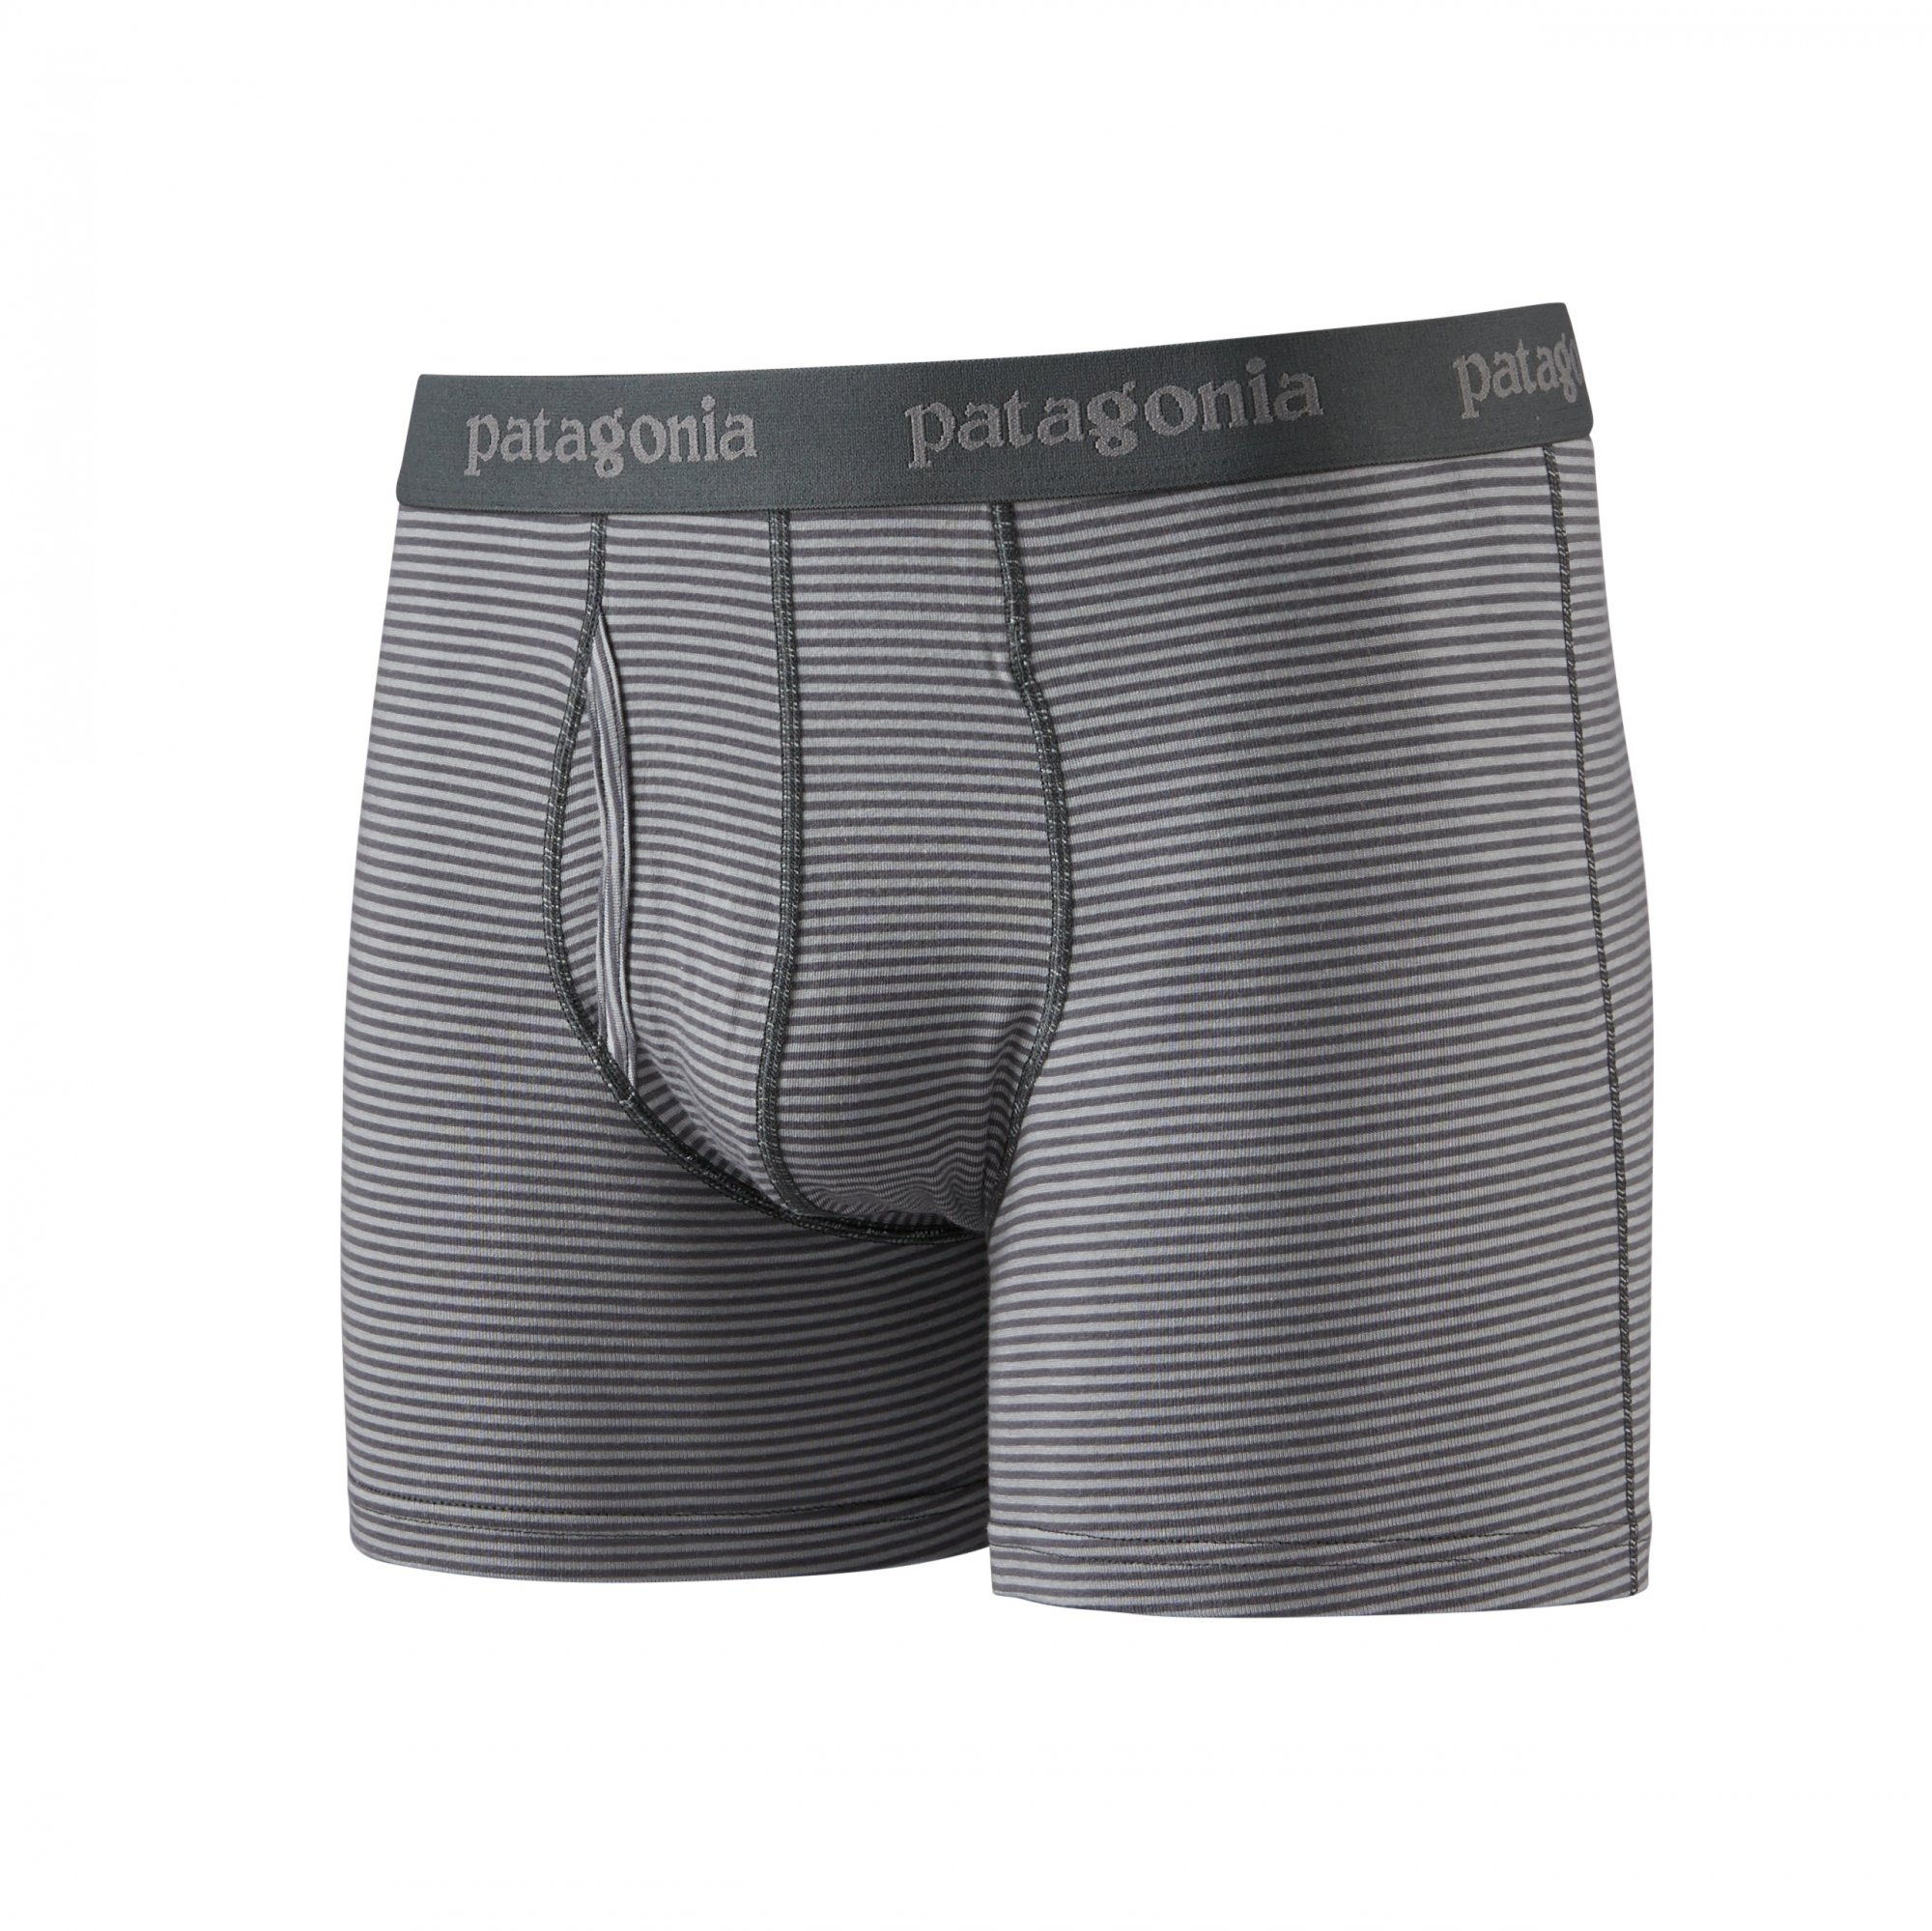 PATAGONIA Men's Essential Boxer Briefs - 3" Fathom: Forge Grey